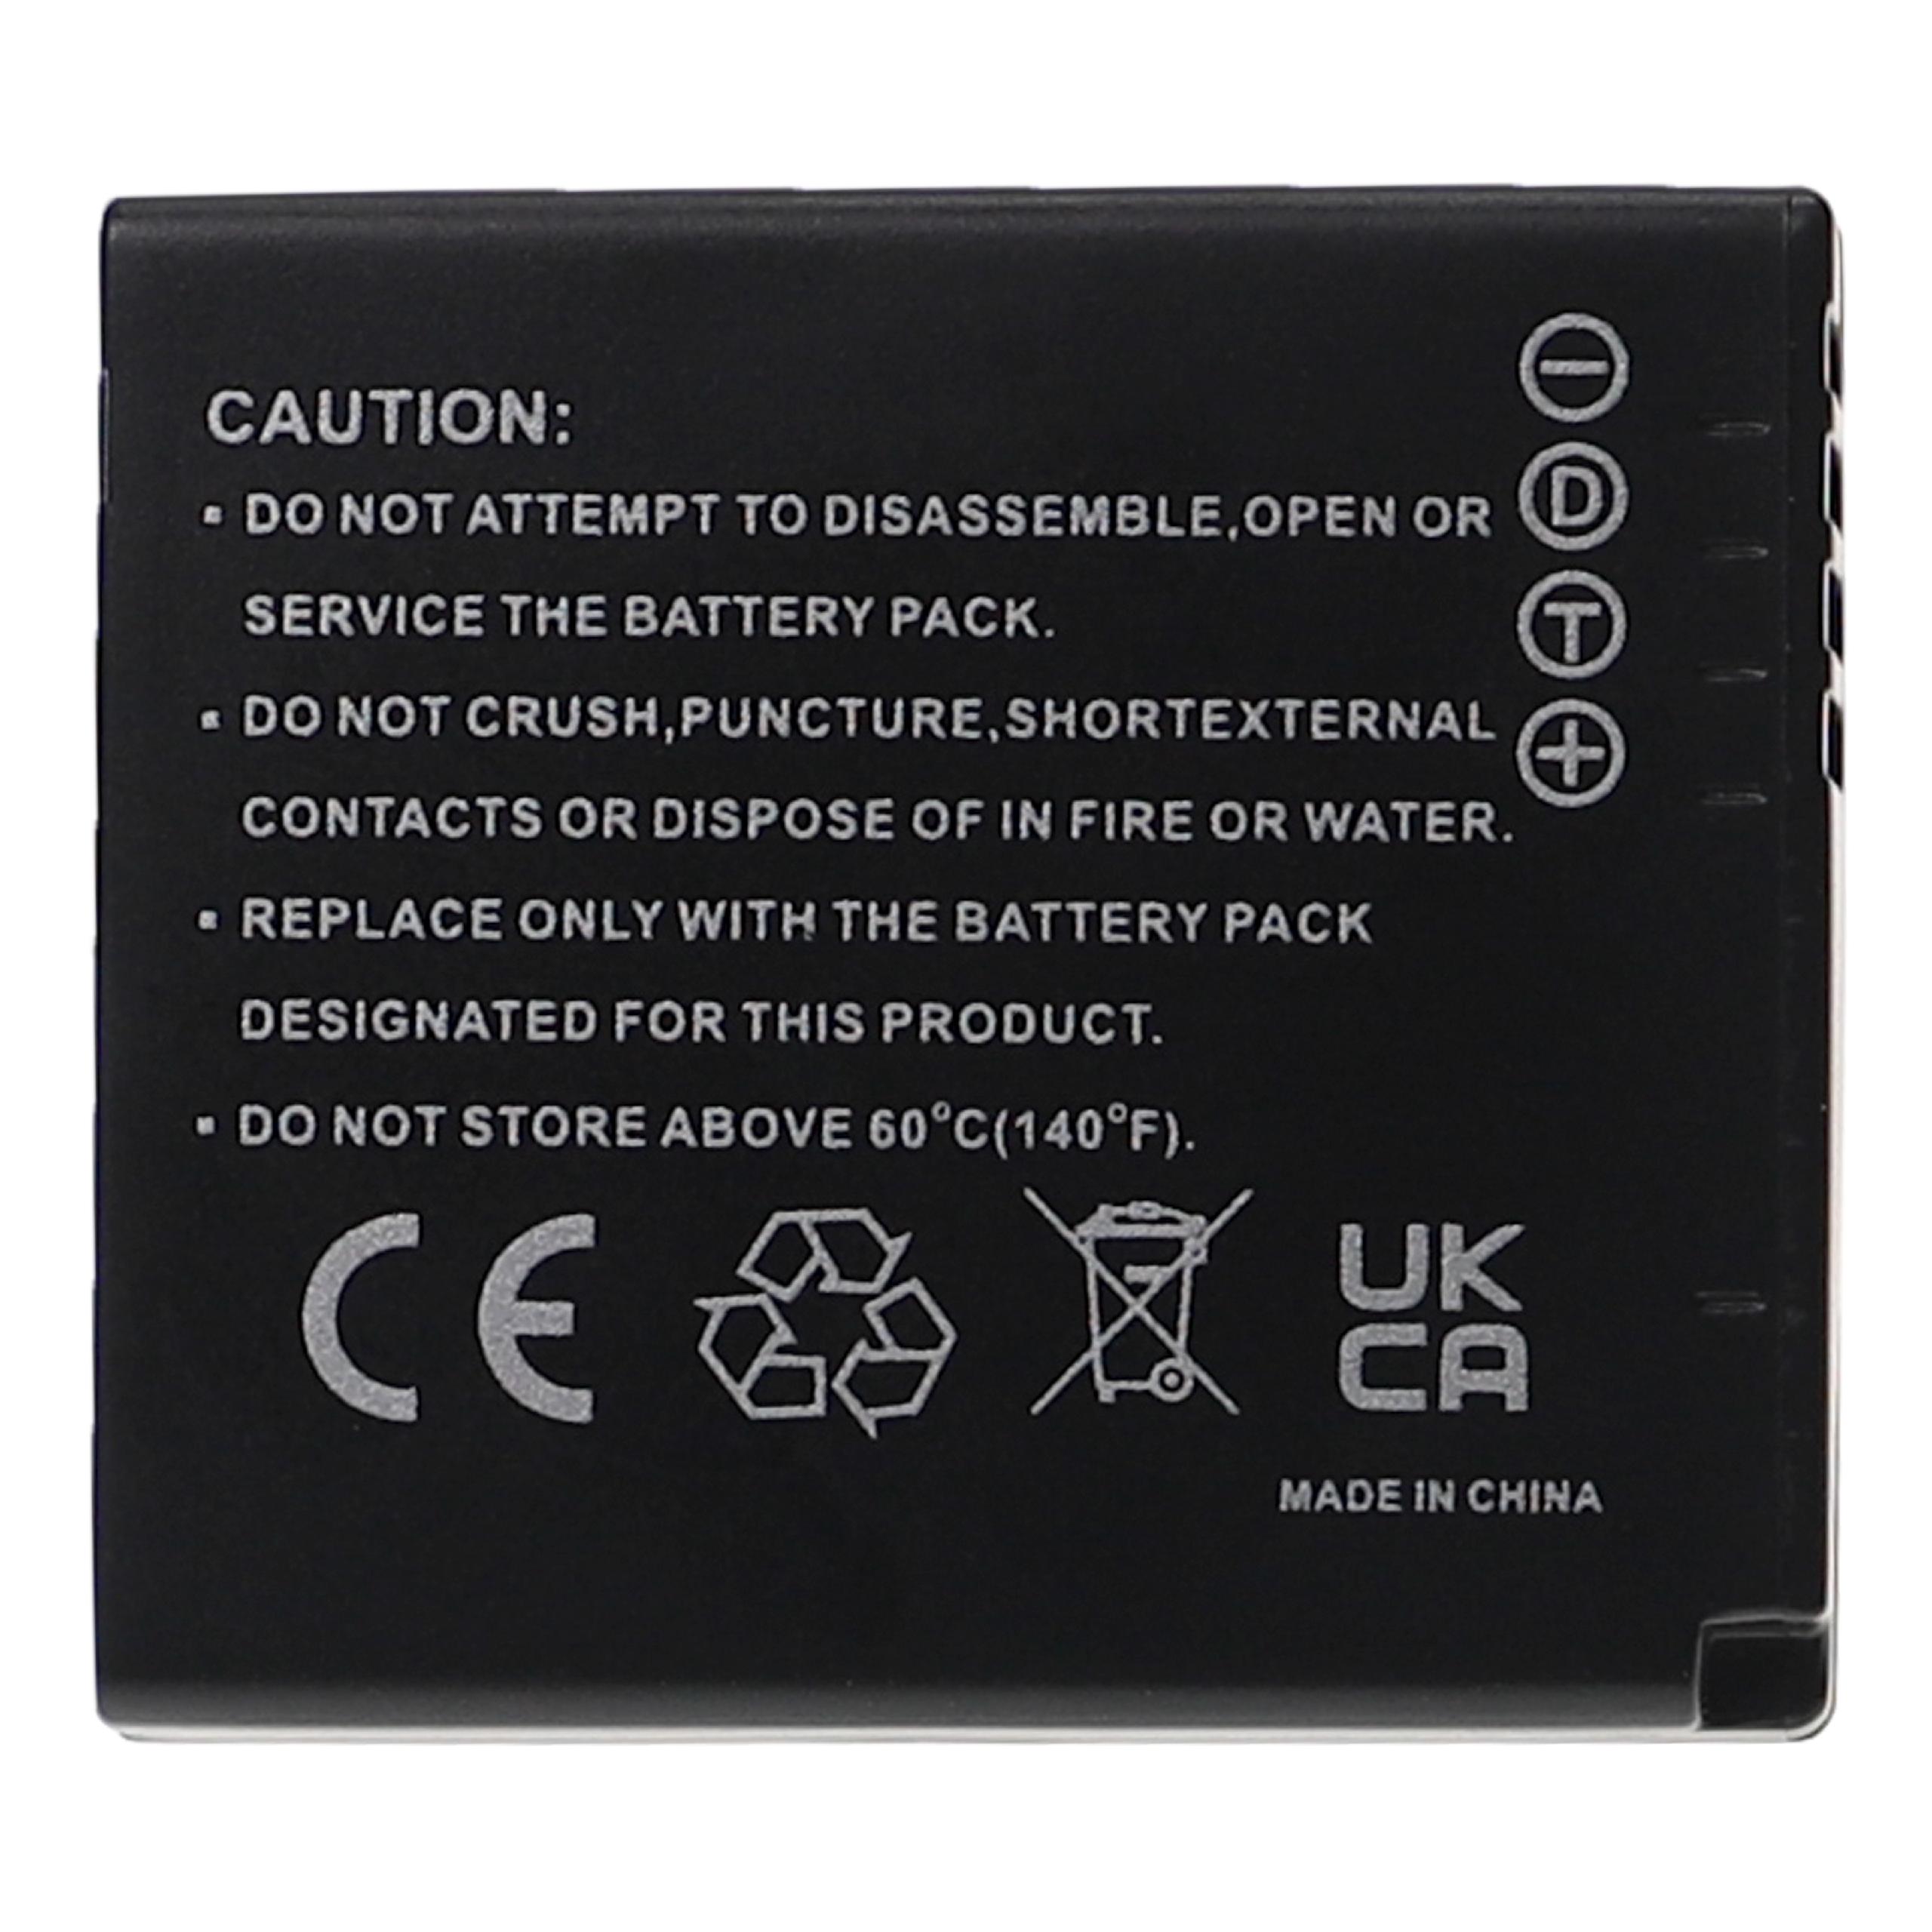 Batterie remplace Panasonic CGA-S/106B, CGA-S/106C, CGA-S009 pour appareil photo - 1000mAh 3,7V Li-ion